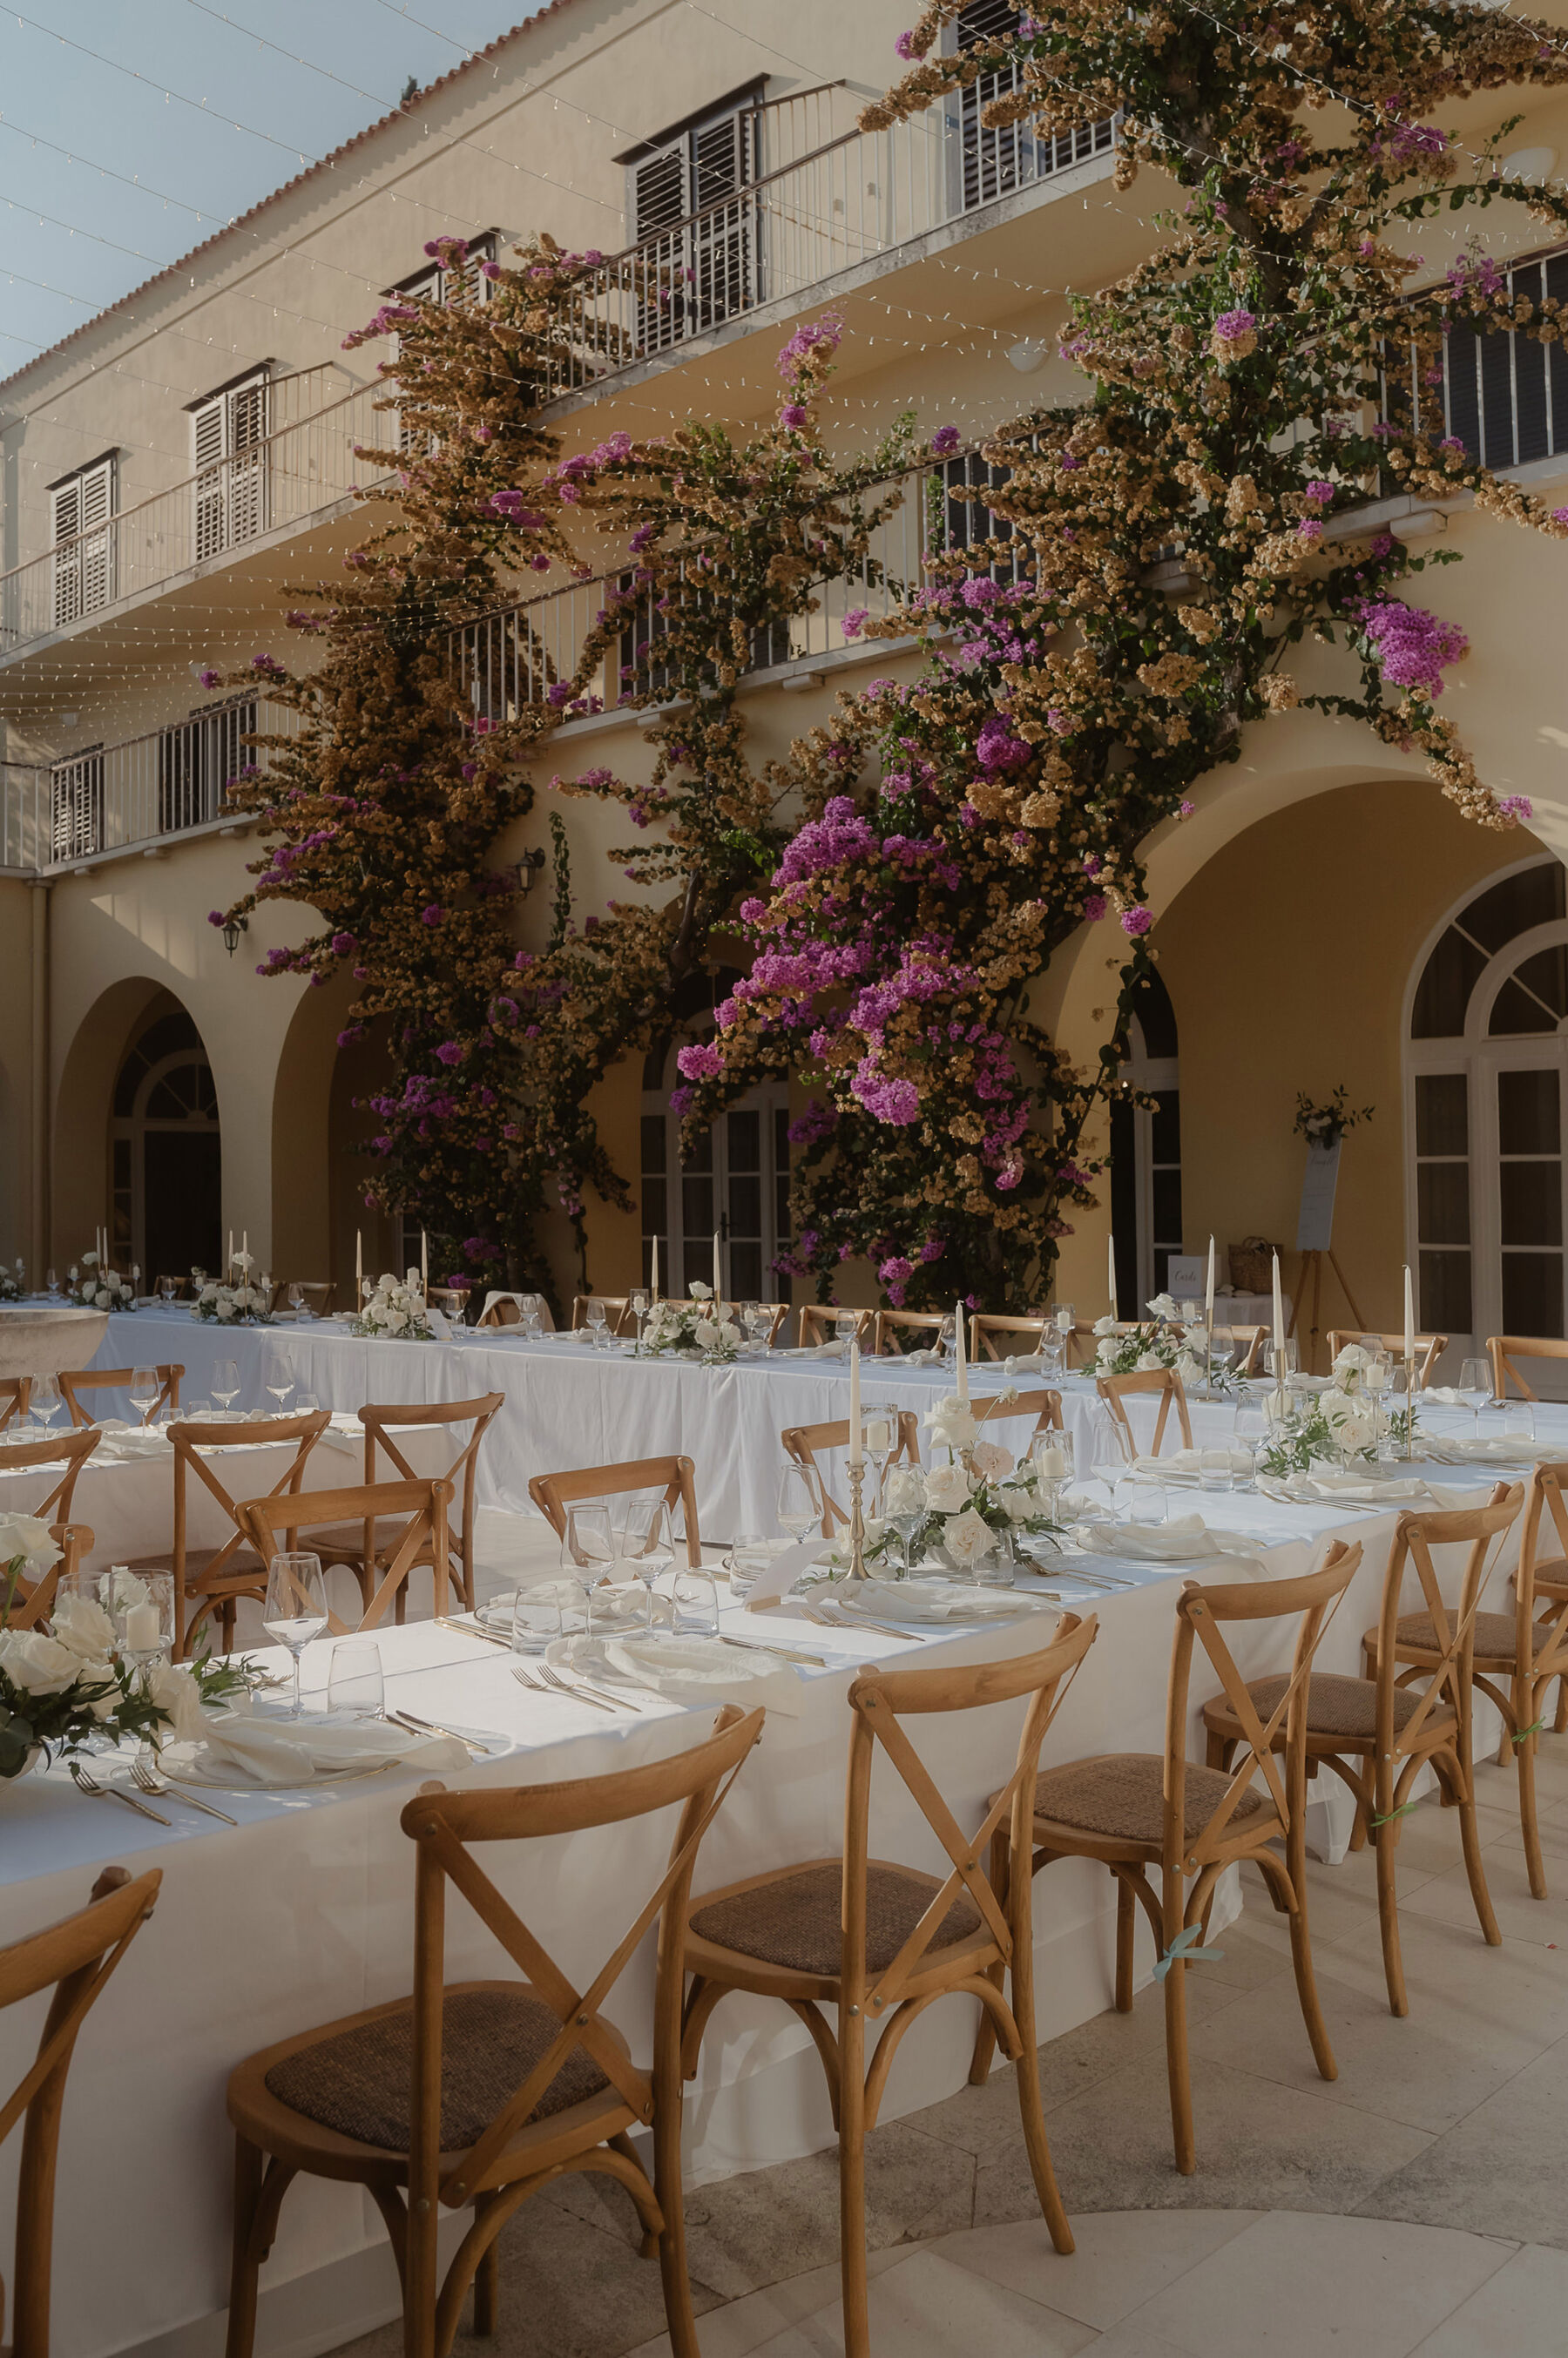 Wooden cross back chairs, white table linen & long tables, outdoor wedding reception, Croatia villa.